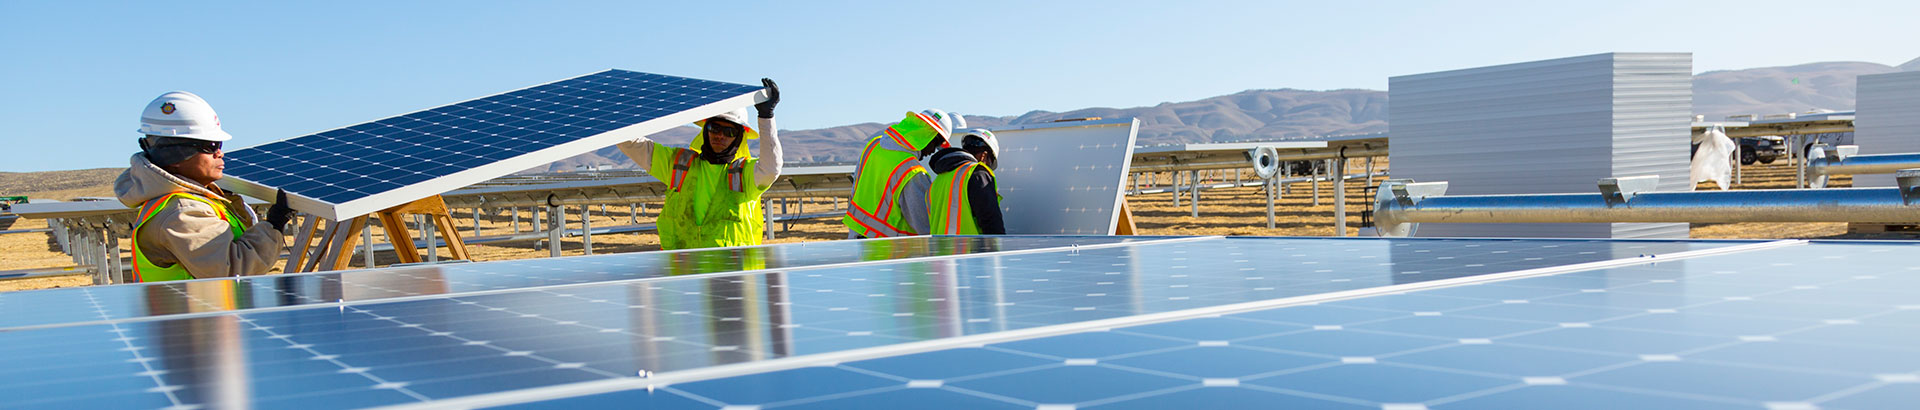 workers installing solar panels in a field